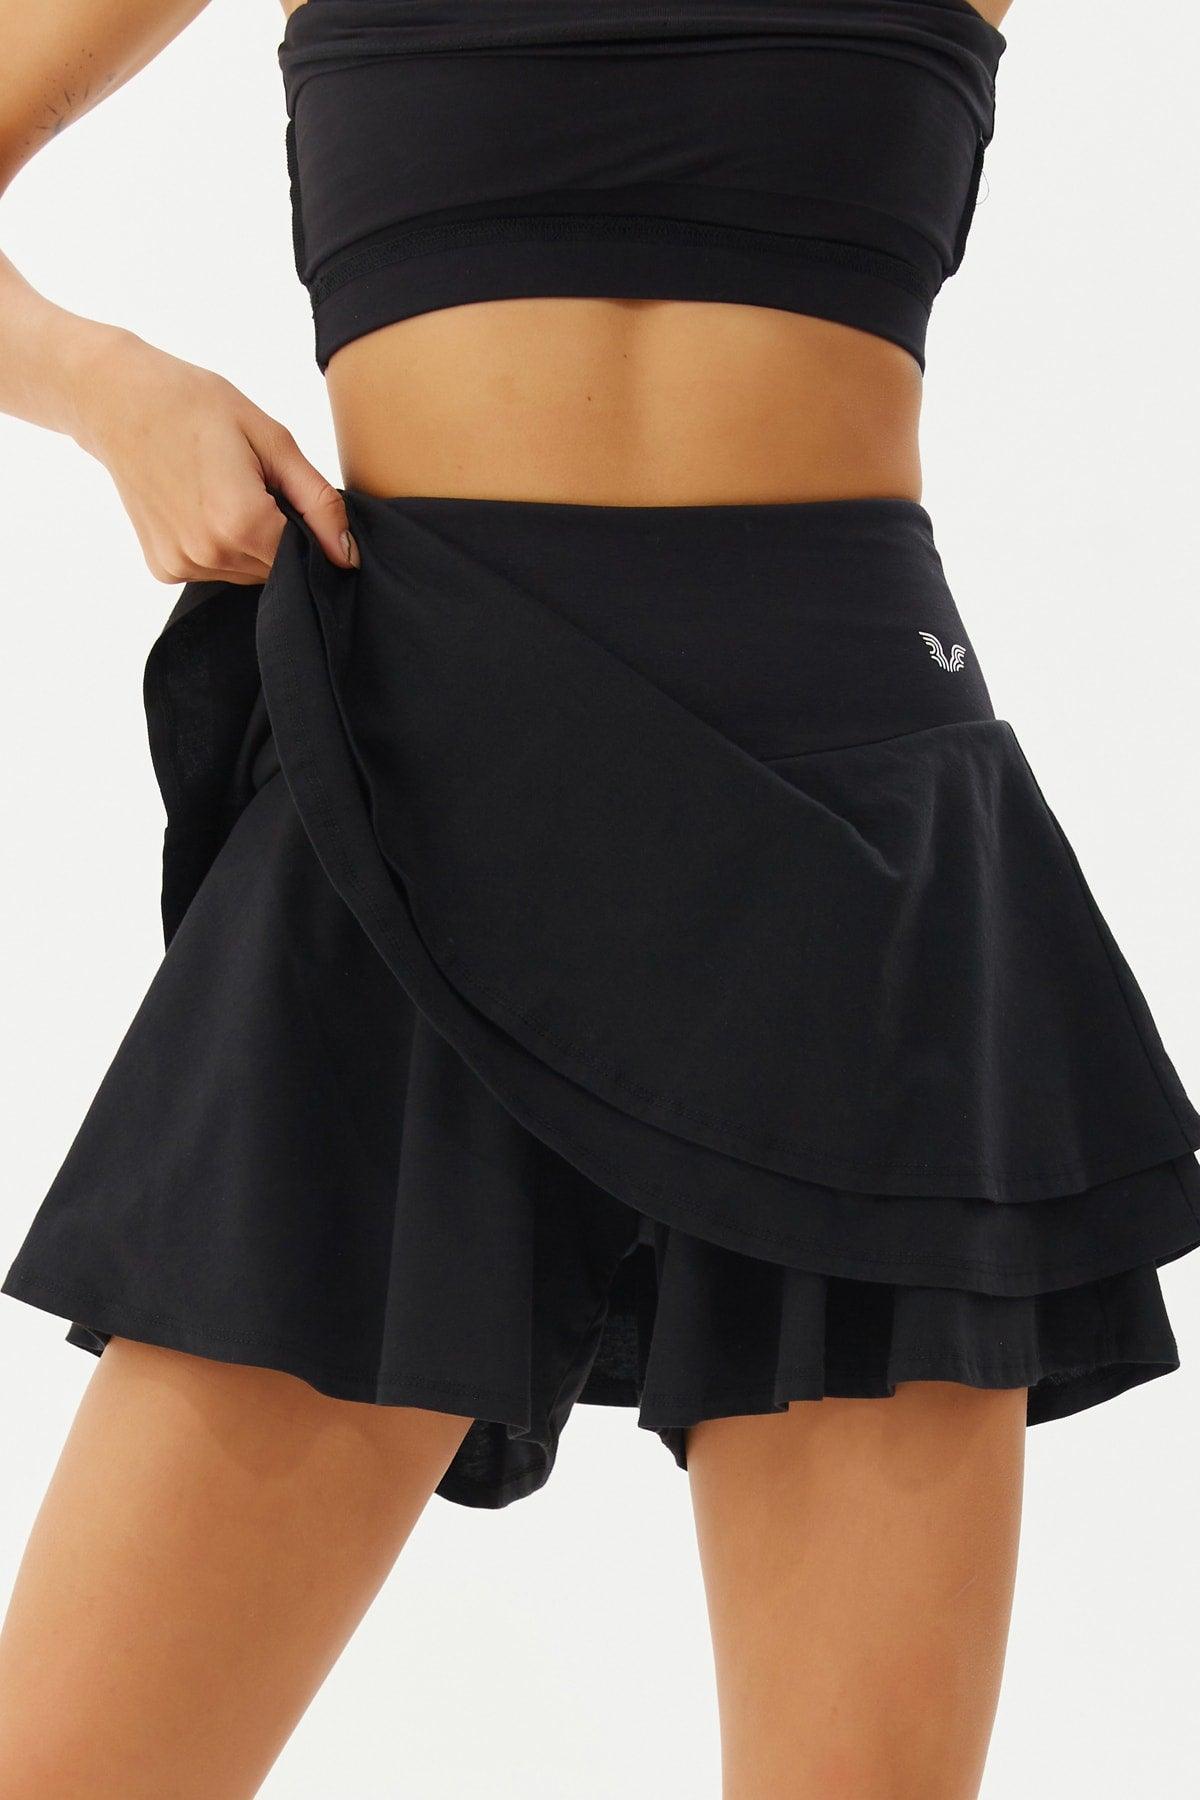 Women's Black High Waist Sports And Daily Summer Solid Color Short Mini Skirt Cotton Shorts Tennis Skirt 0110 - Swordslife